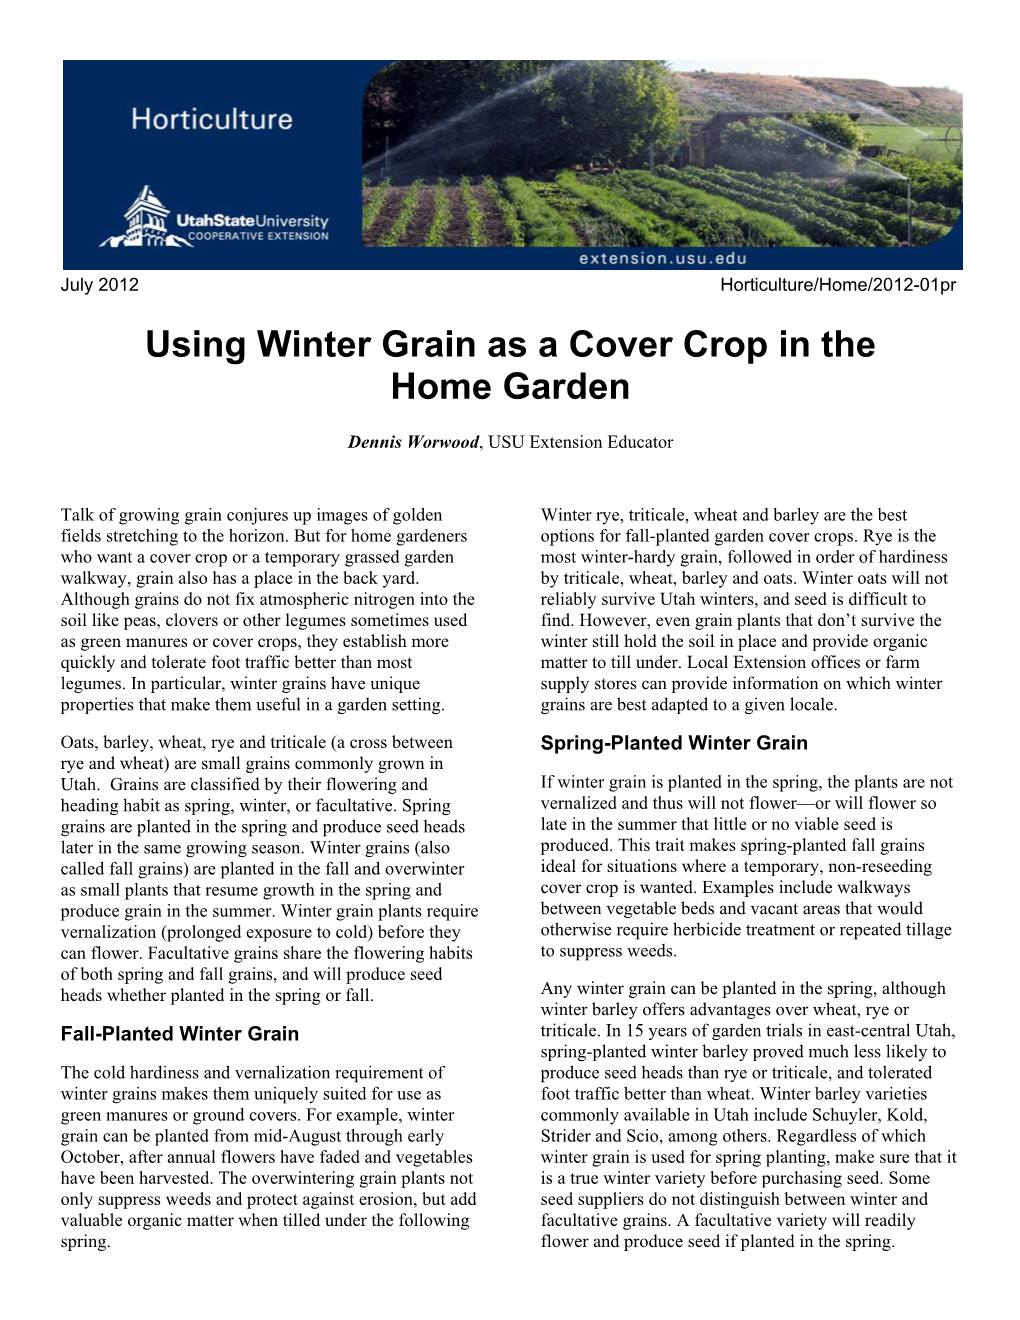 Using Winter Grain As a Cover Crop in the Home Garden